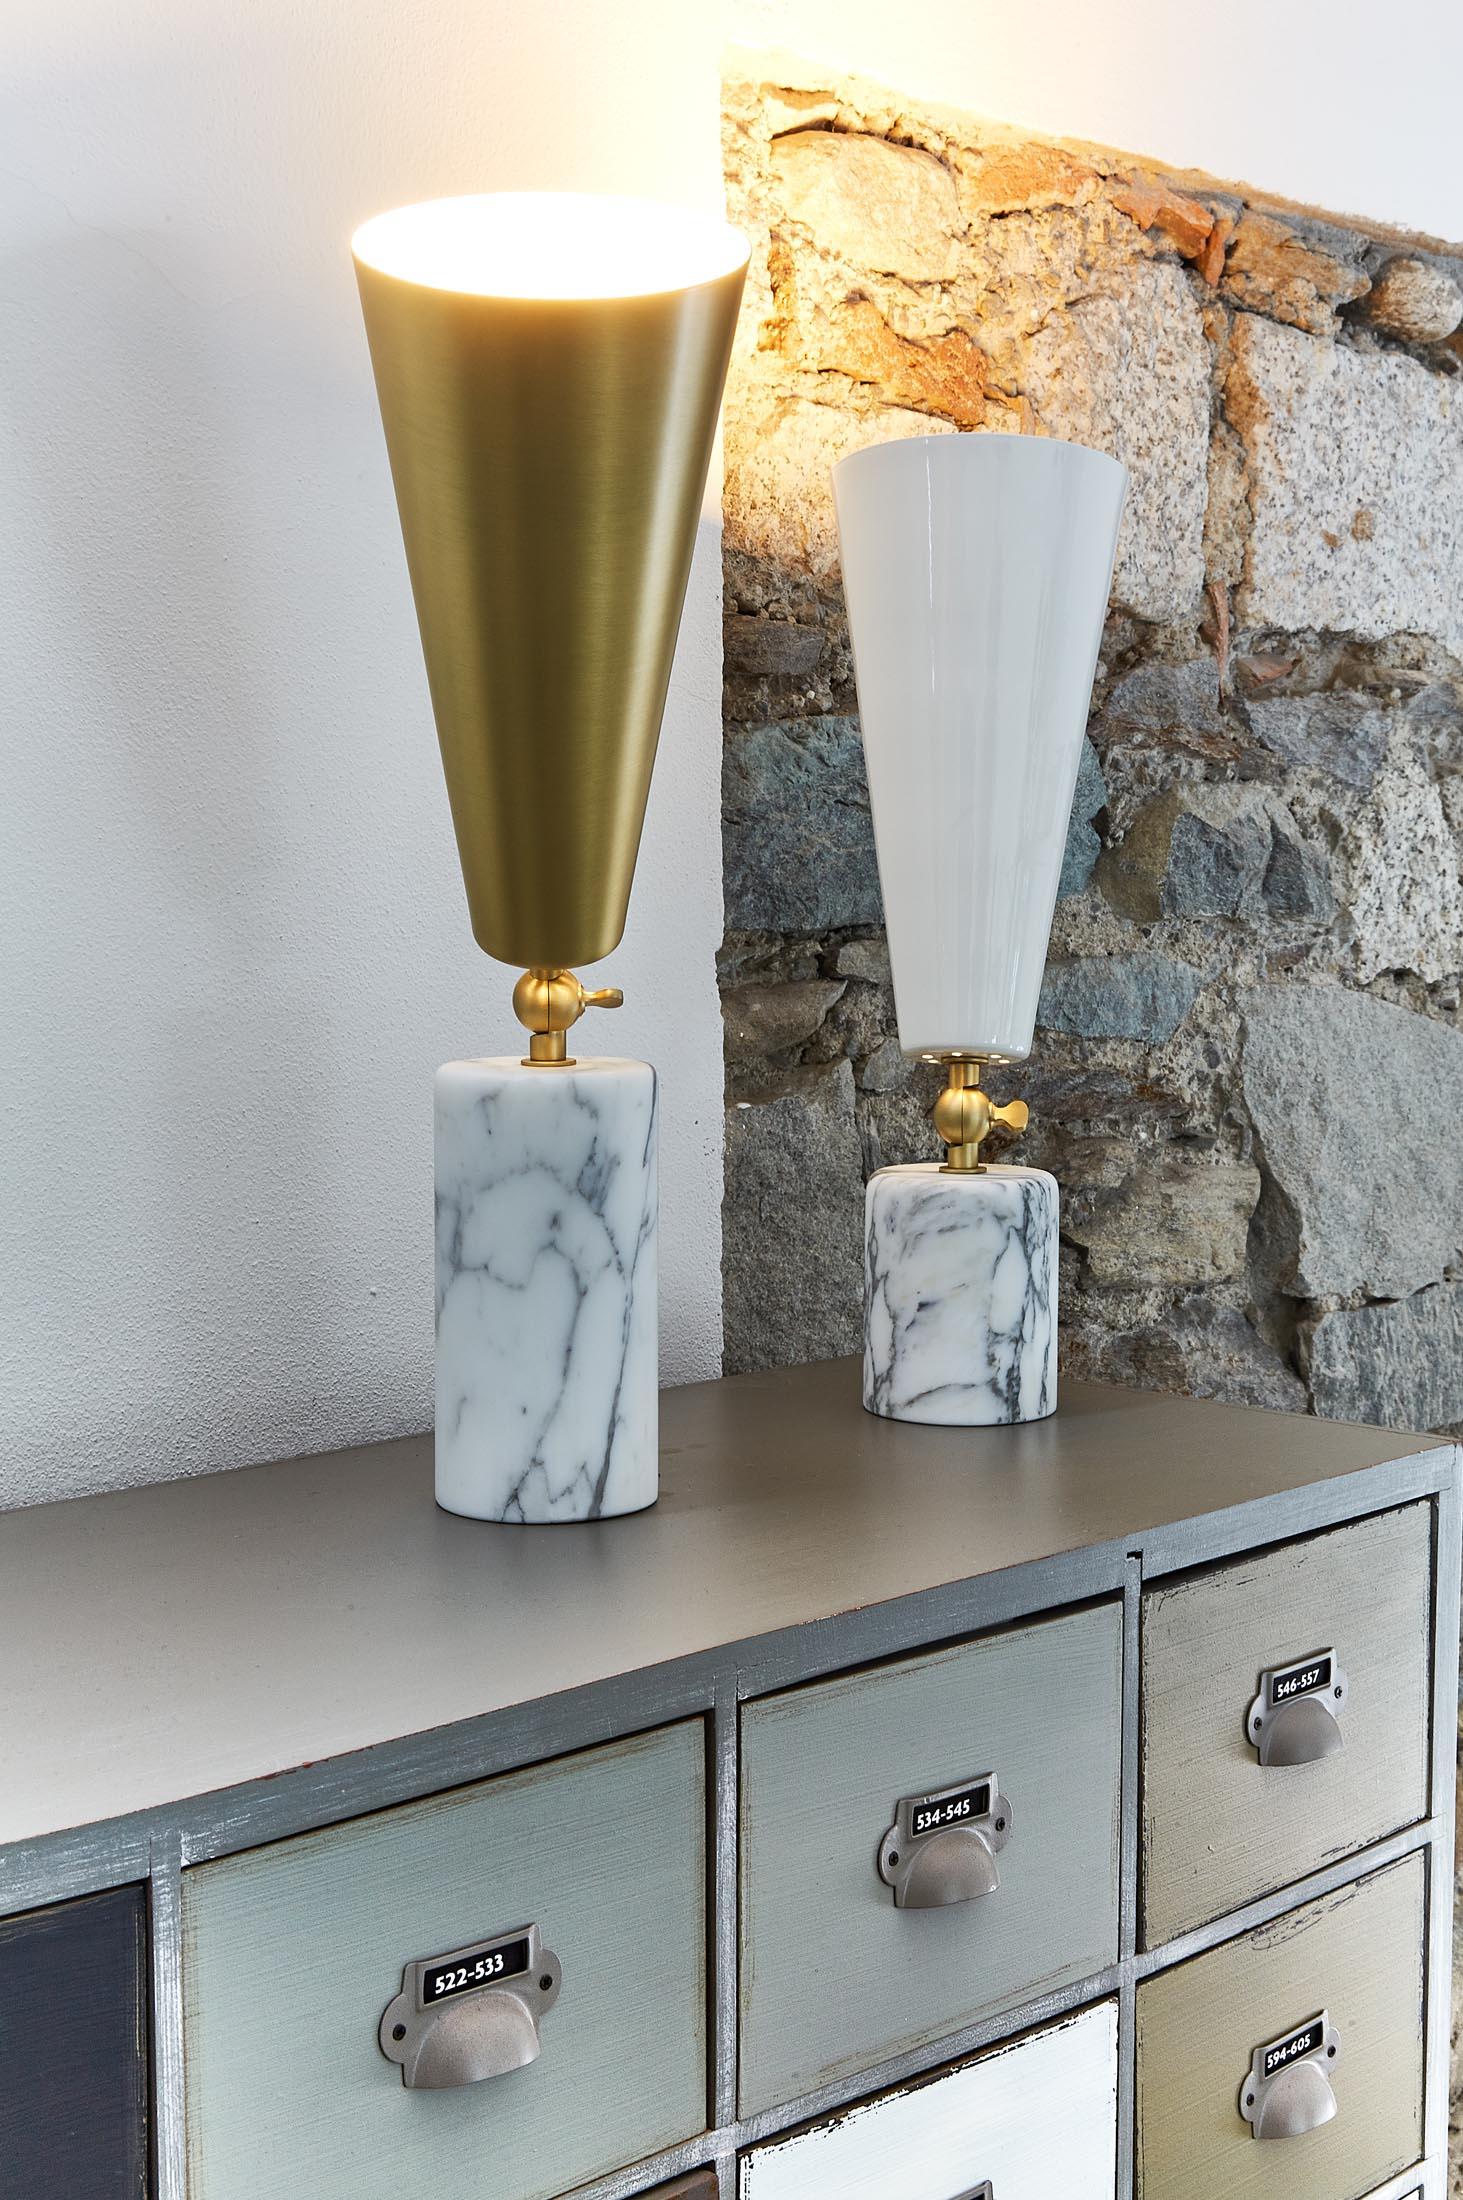 Tato Italia 'Vox' Table Lamp in White Carrara Marble and Satin Brass In New Condition For Sale In Glendale, CA